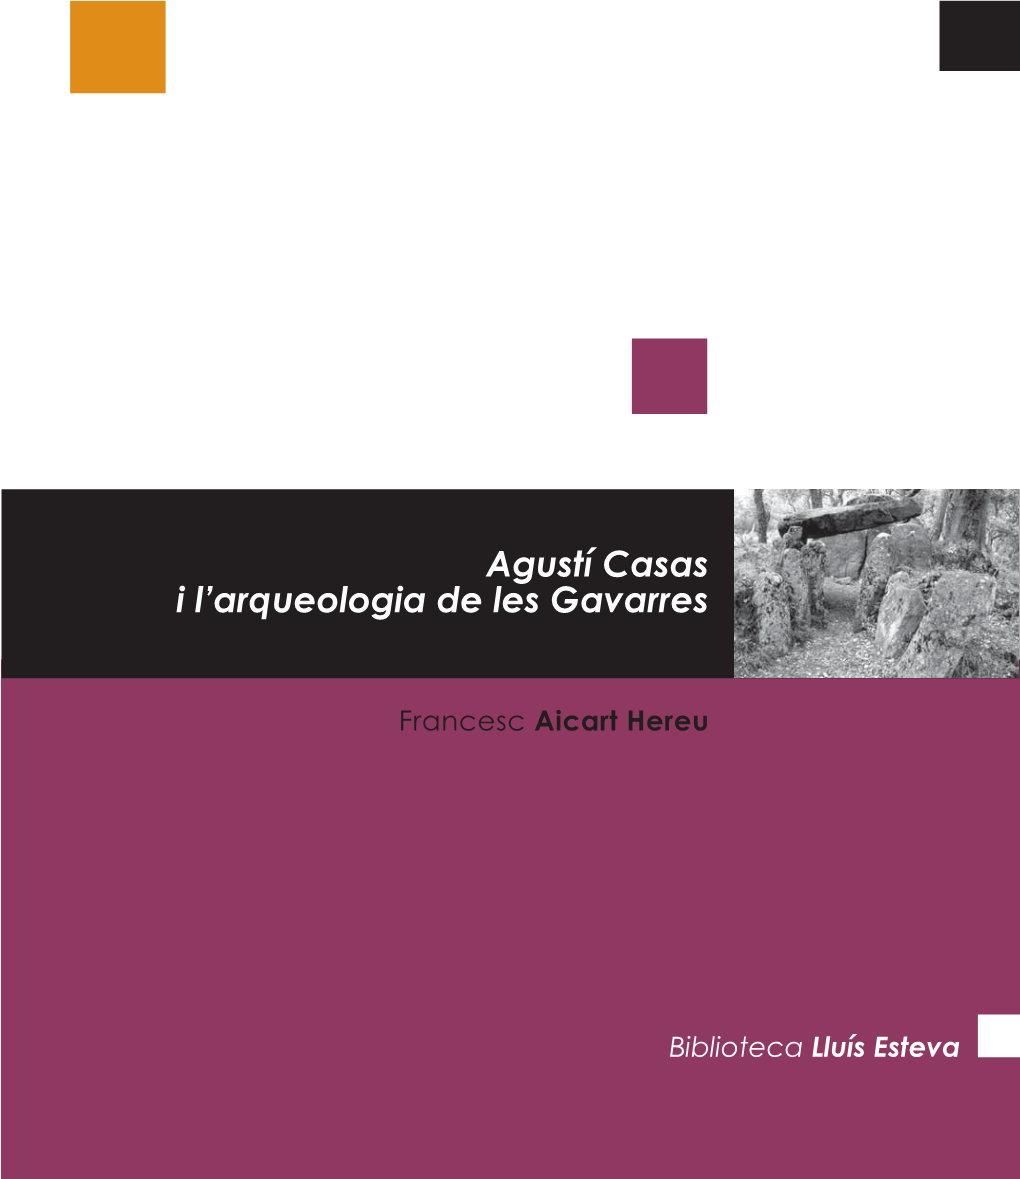 Agustí Casas I L'arqueologia a Les Gavarres